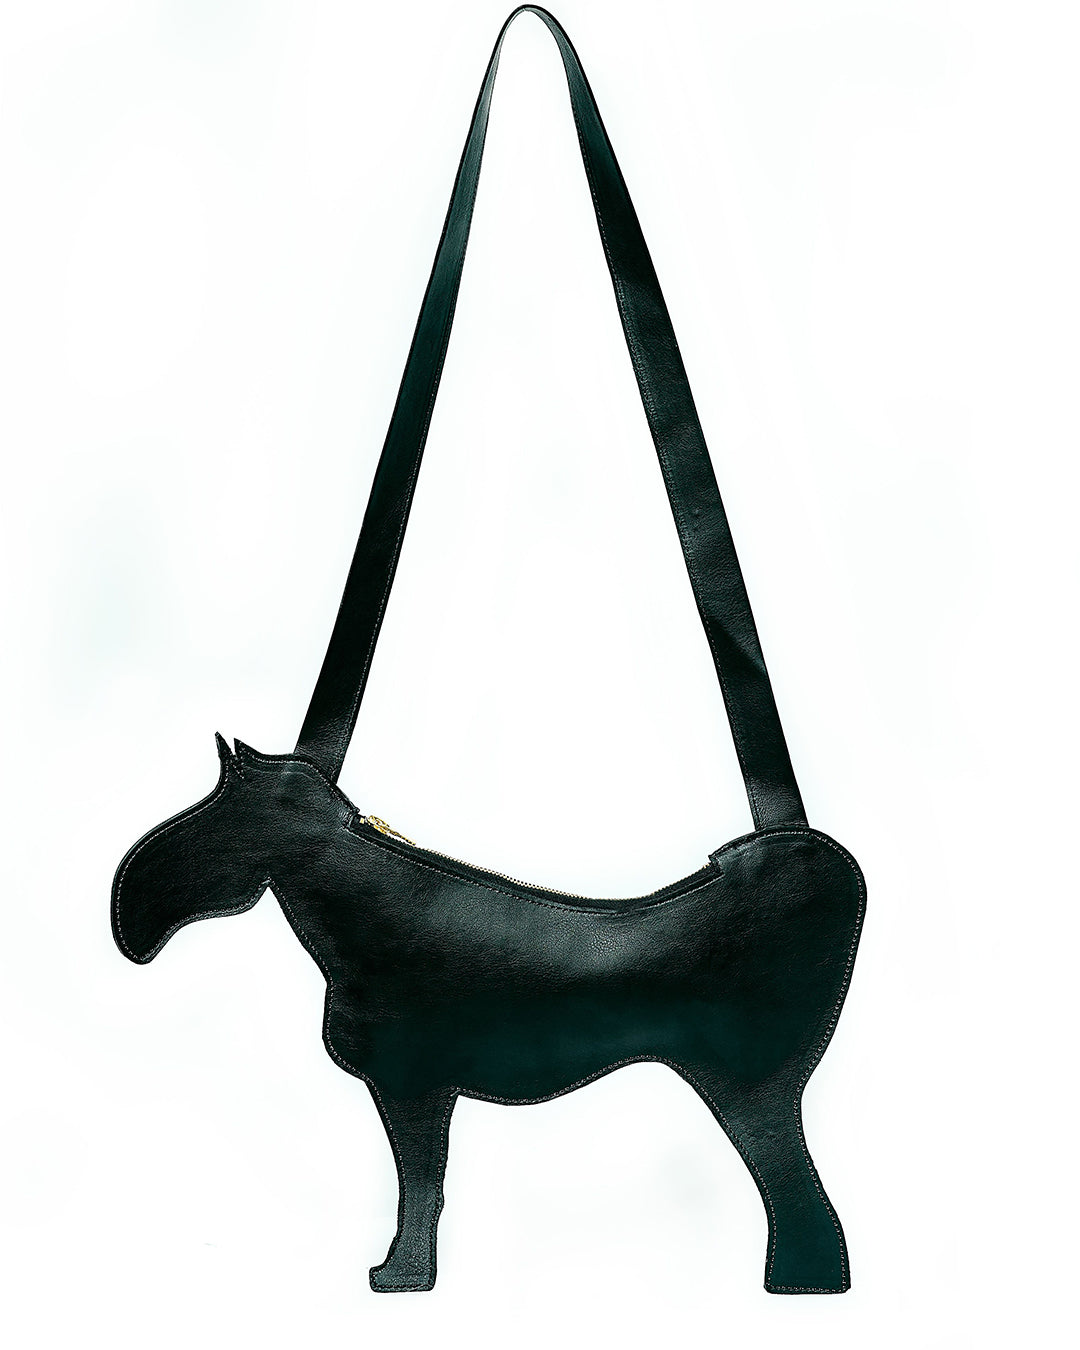 Black "Horse" Bag